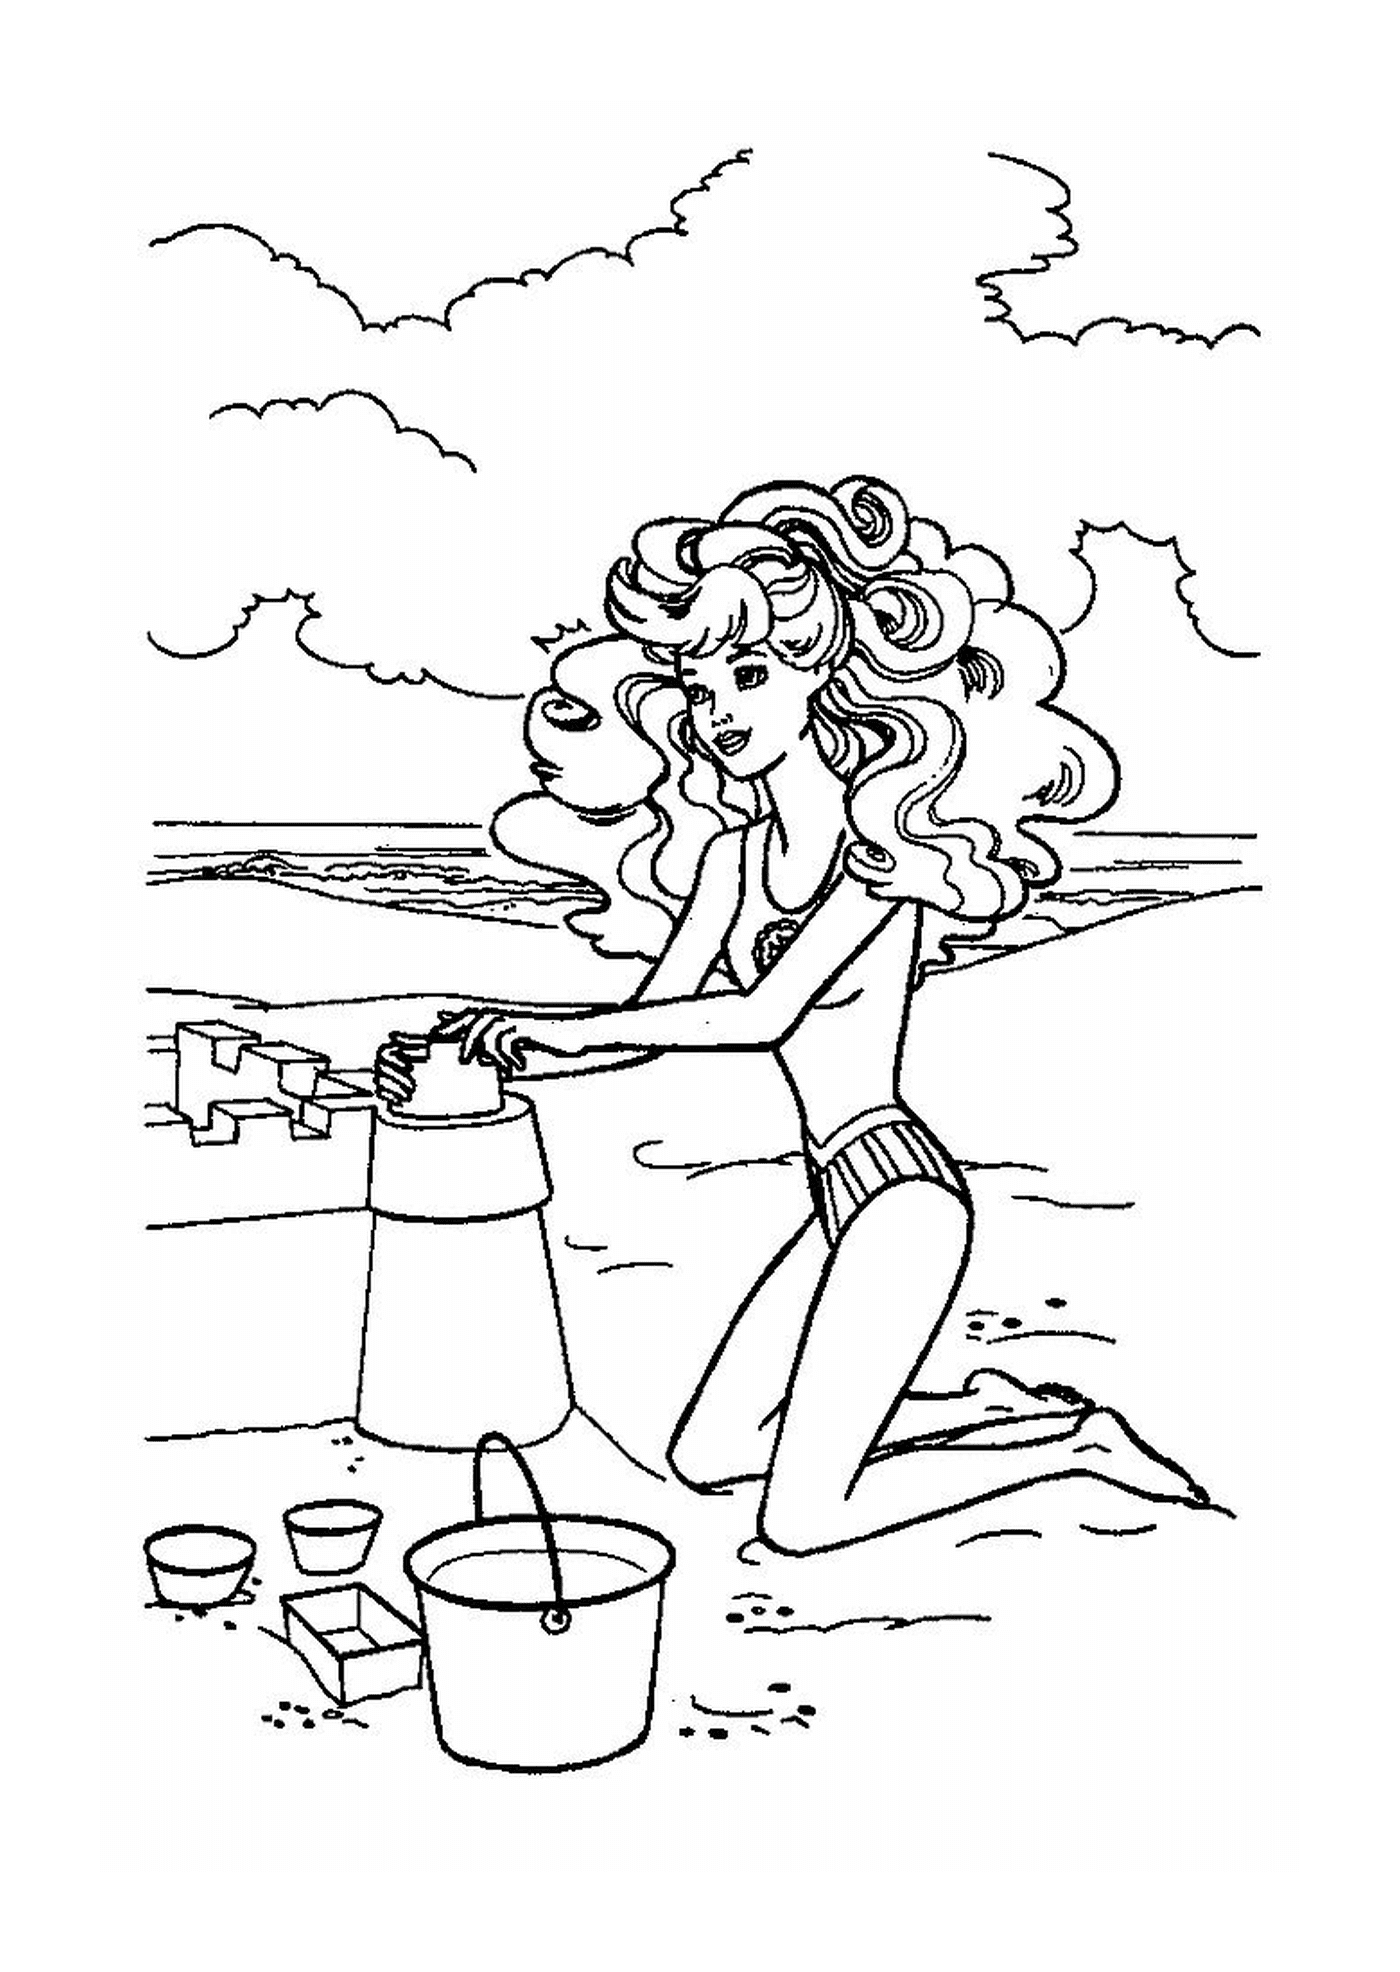  Barbie e a maravilhosa ilha com uma mulher na praia 